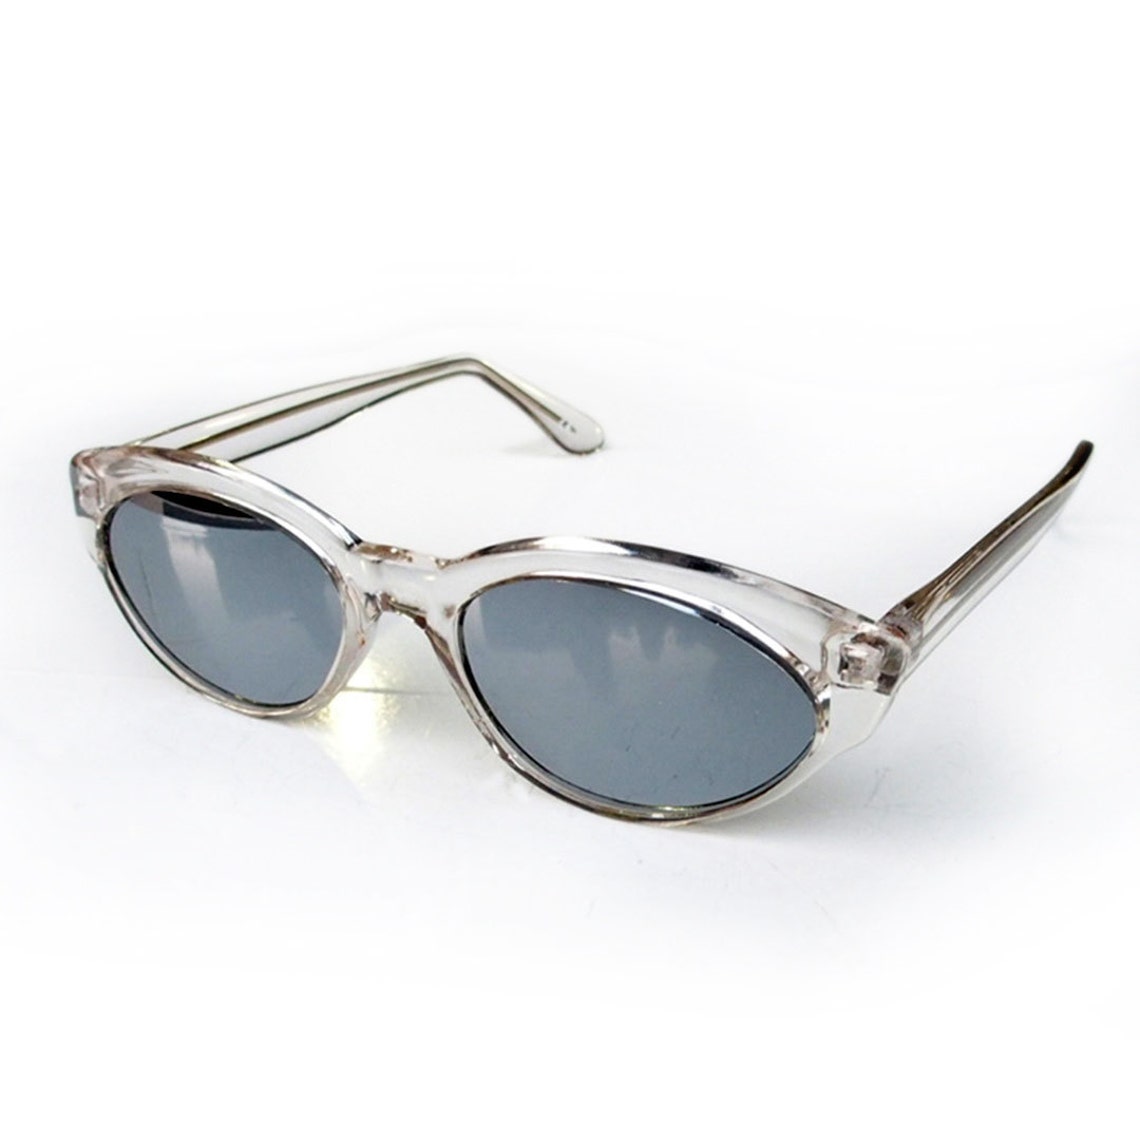 Cats Eye Sunglasses Vintage Retro Sunglasses Nos 80 S Etsy